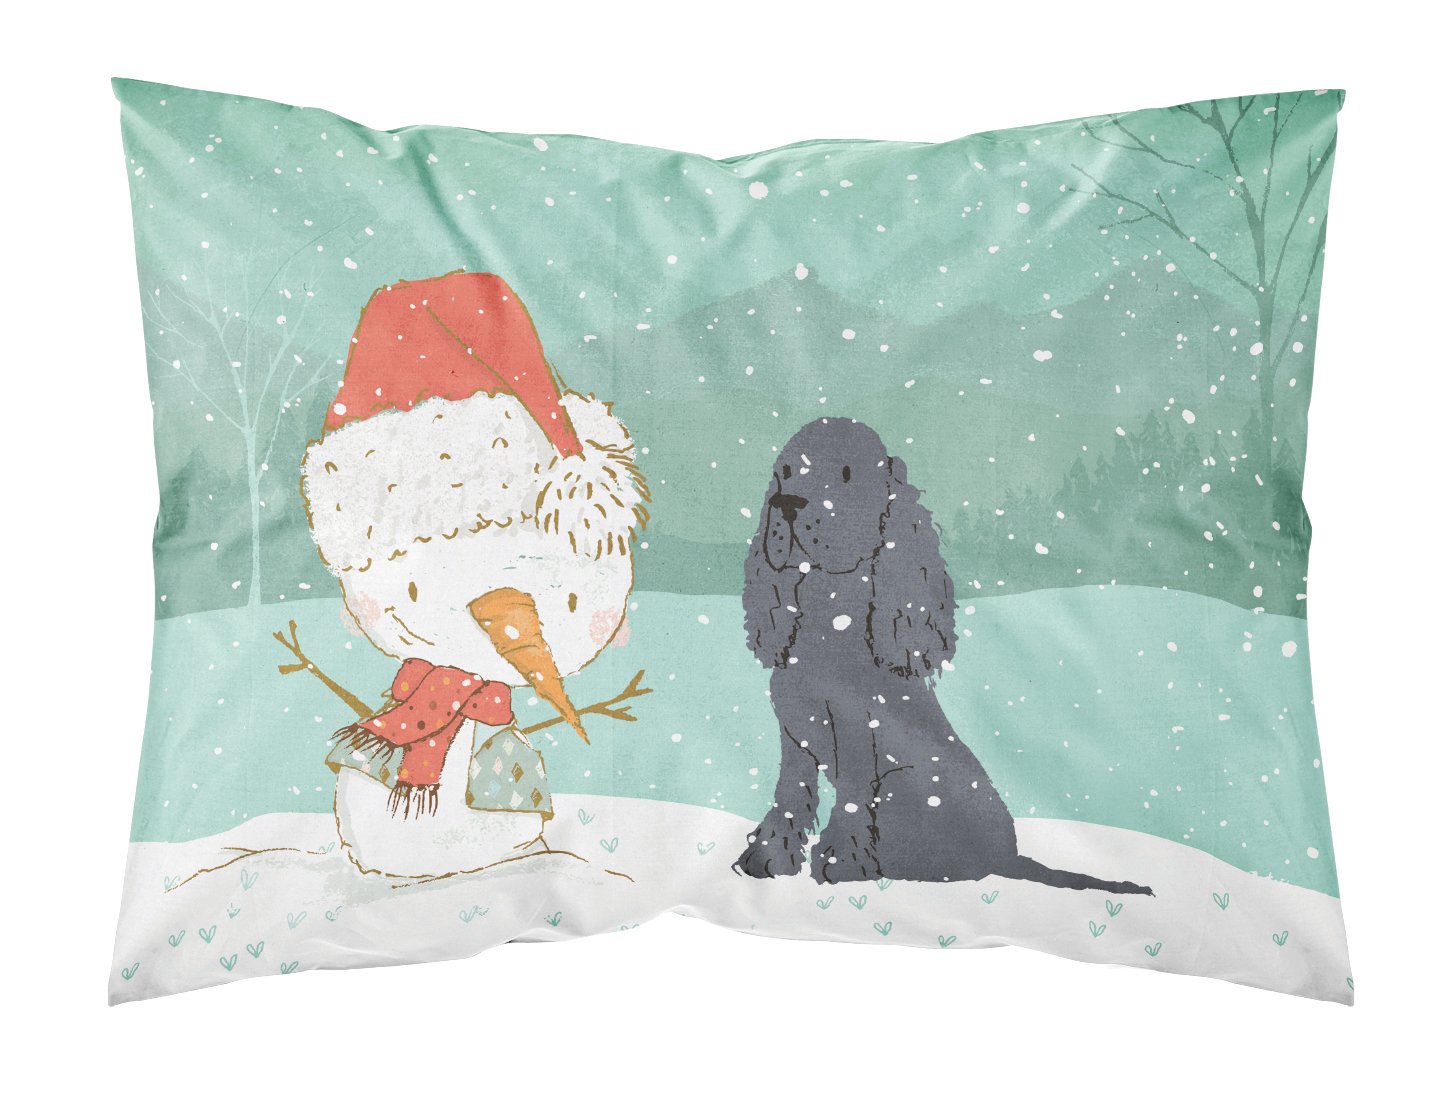 Black Spaniel Snowman Christmas Fabric Standard Pillowcase CK2070PILLOWCASE by Caroline's Treasures